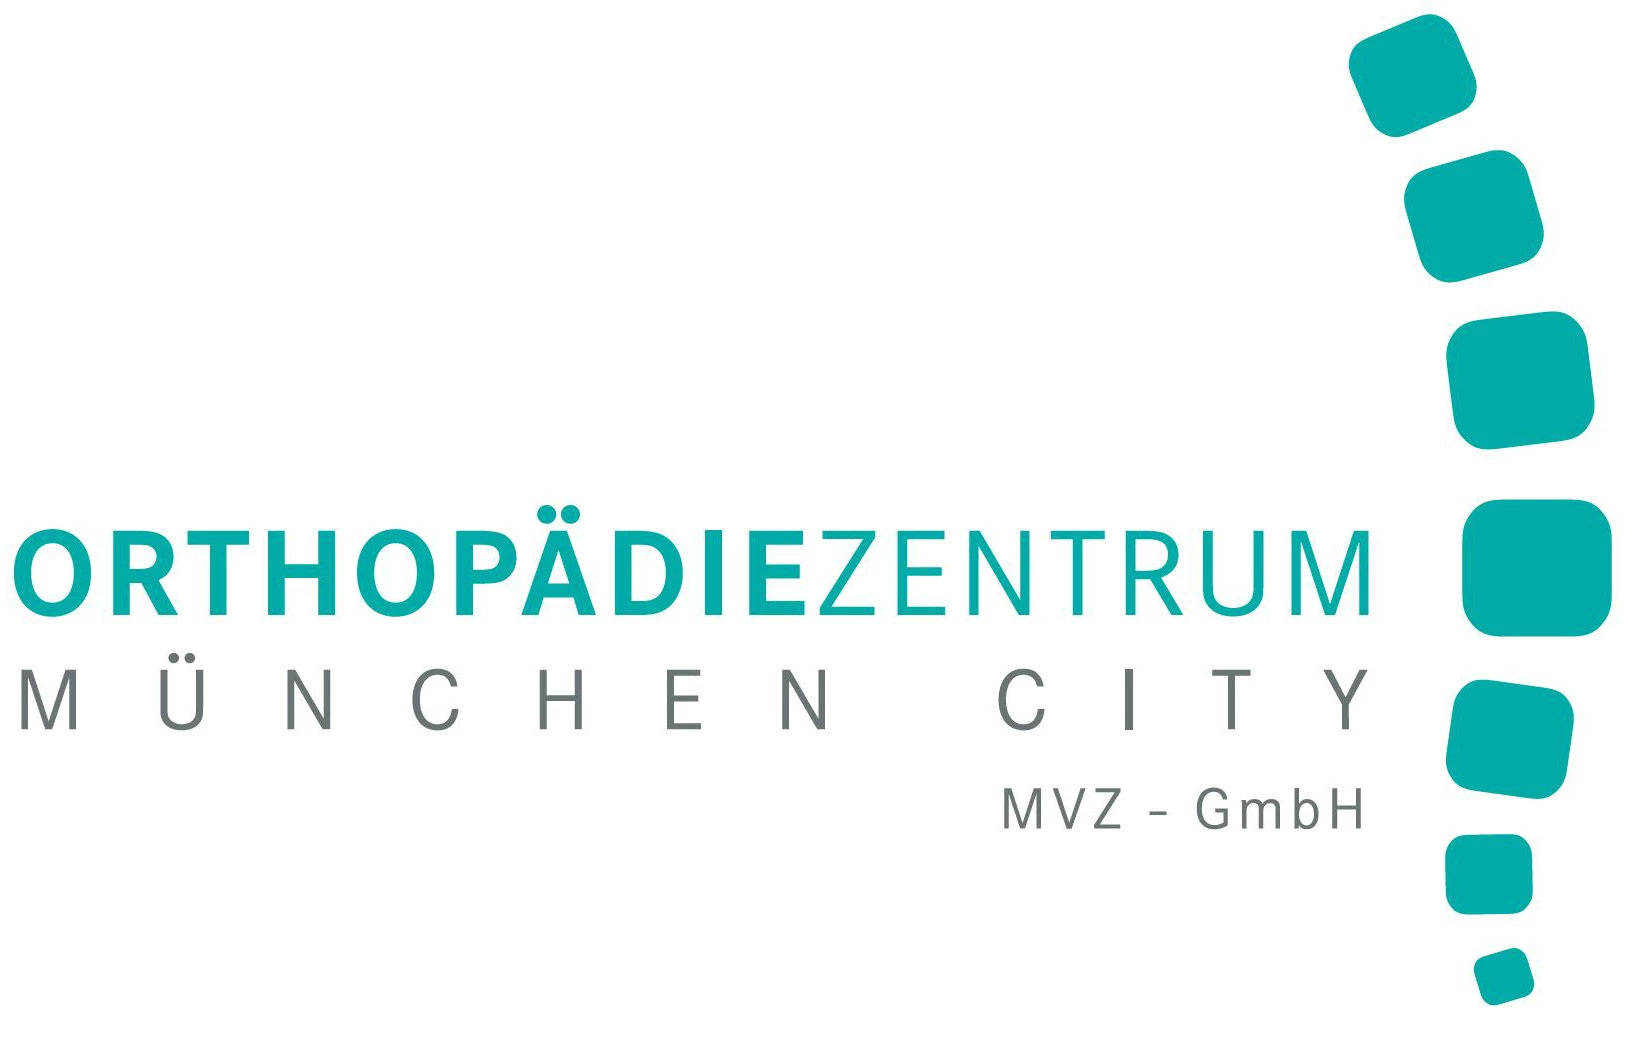 Orthopädiezentrum München City MVZ GmbH